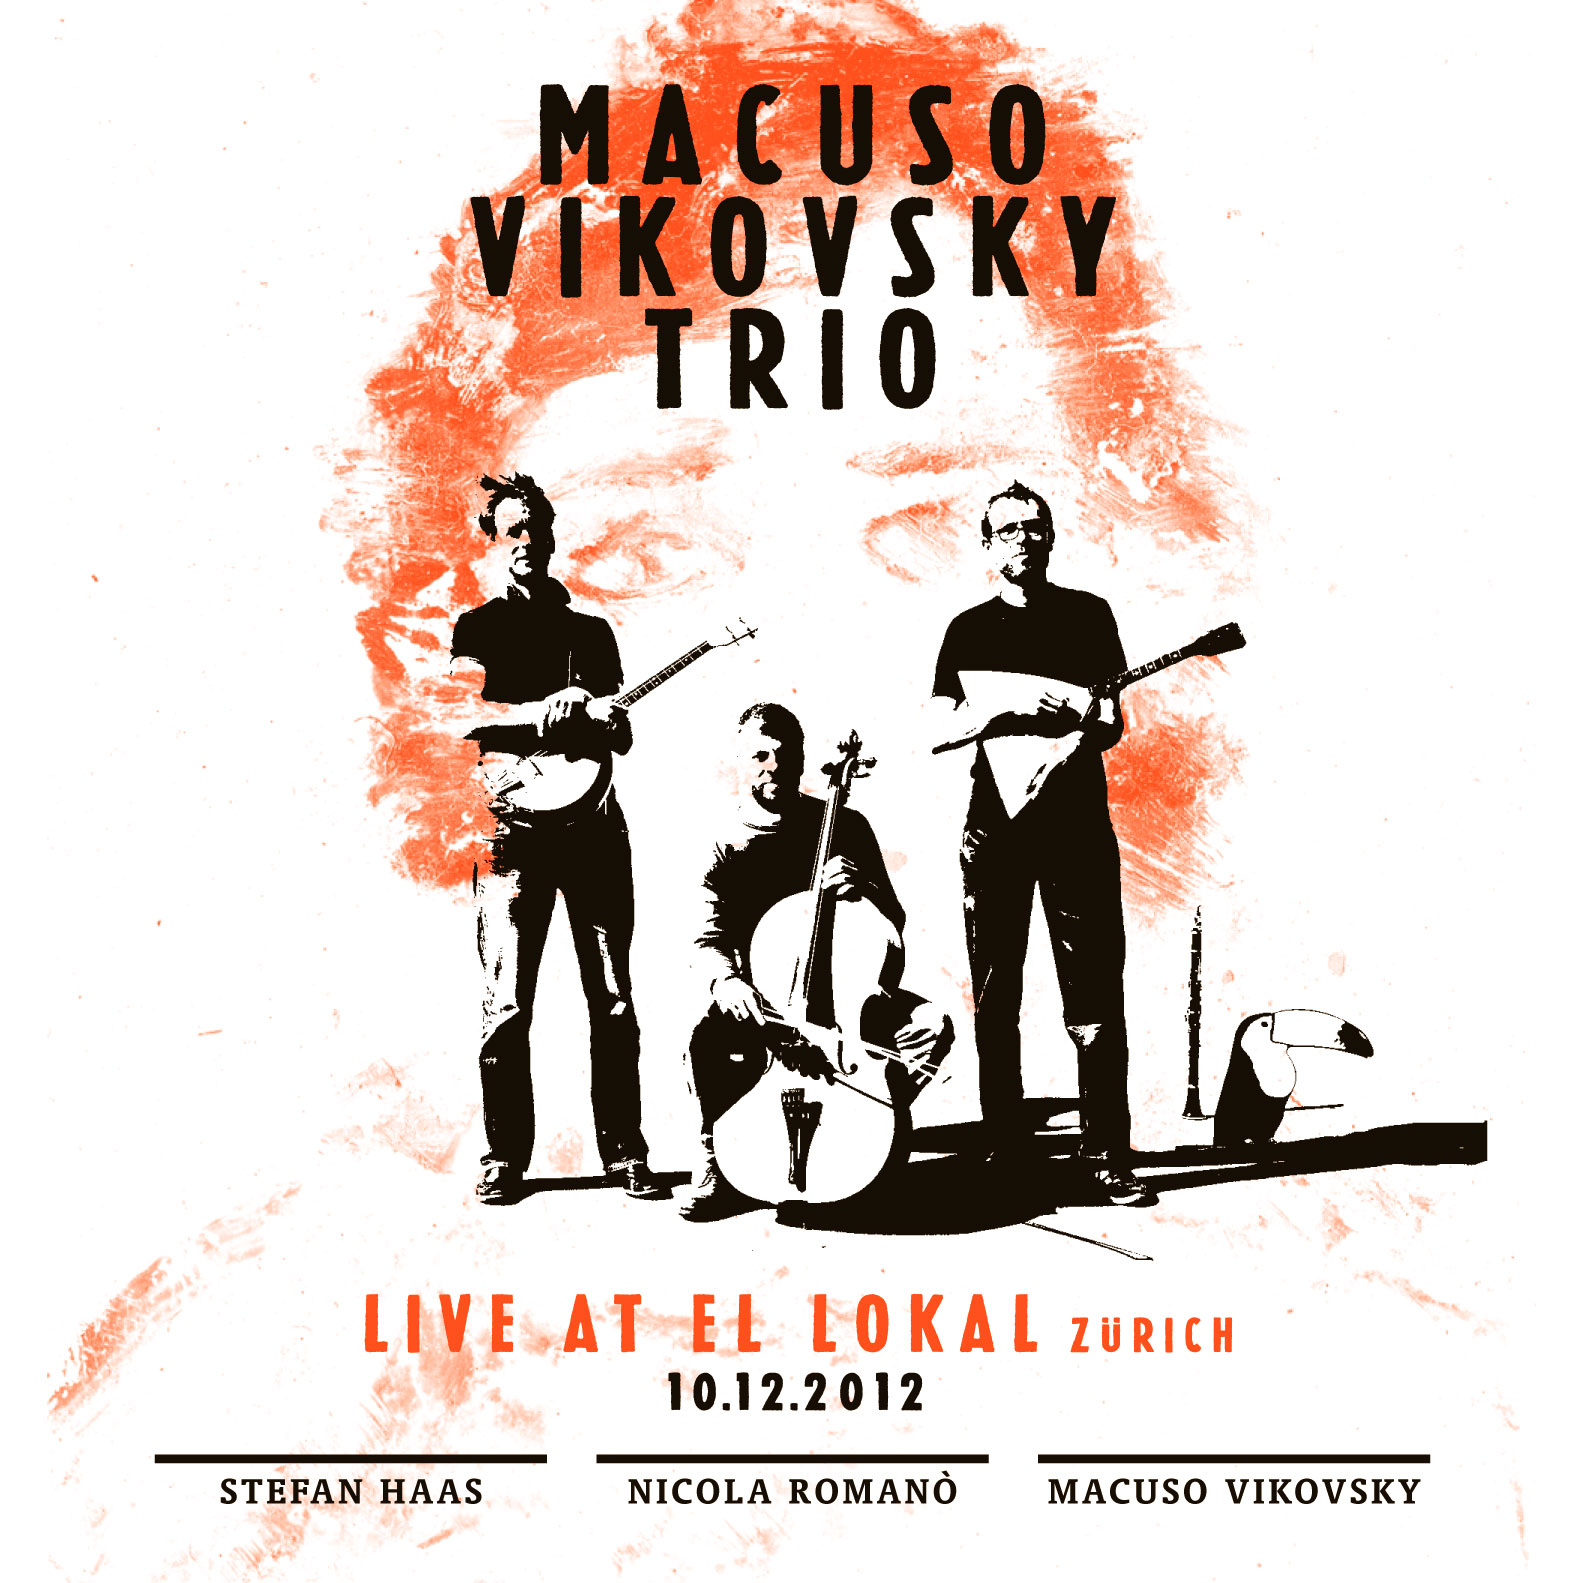 Flyer Macuso Vikovsky Trio im El Lokal Zurich,  2012